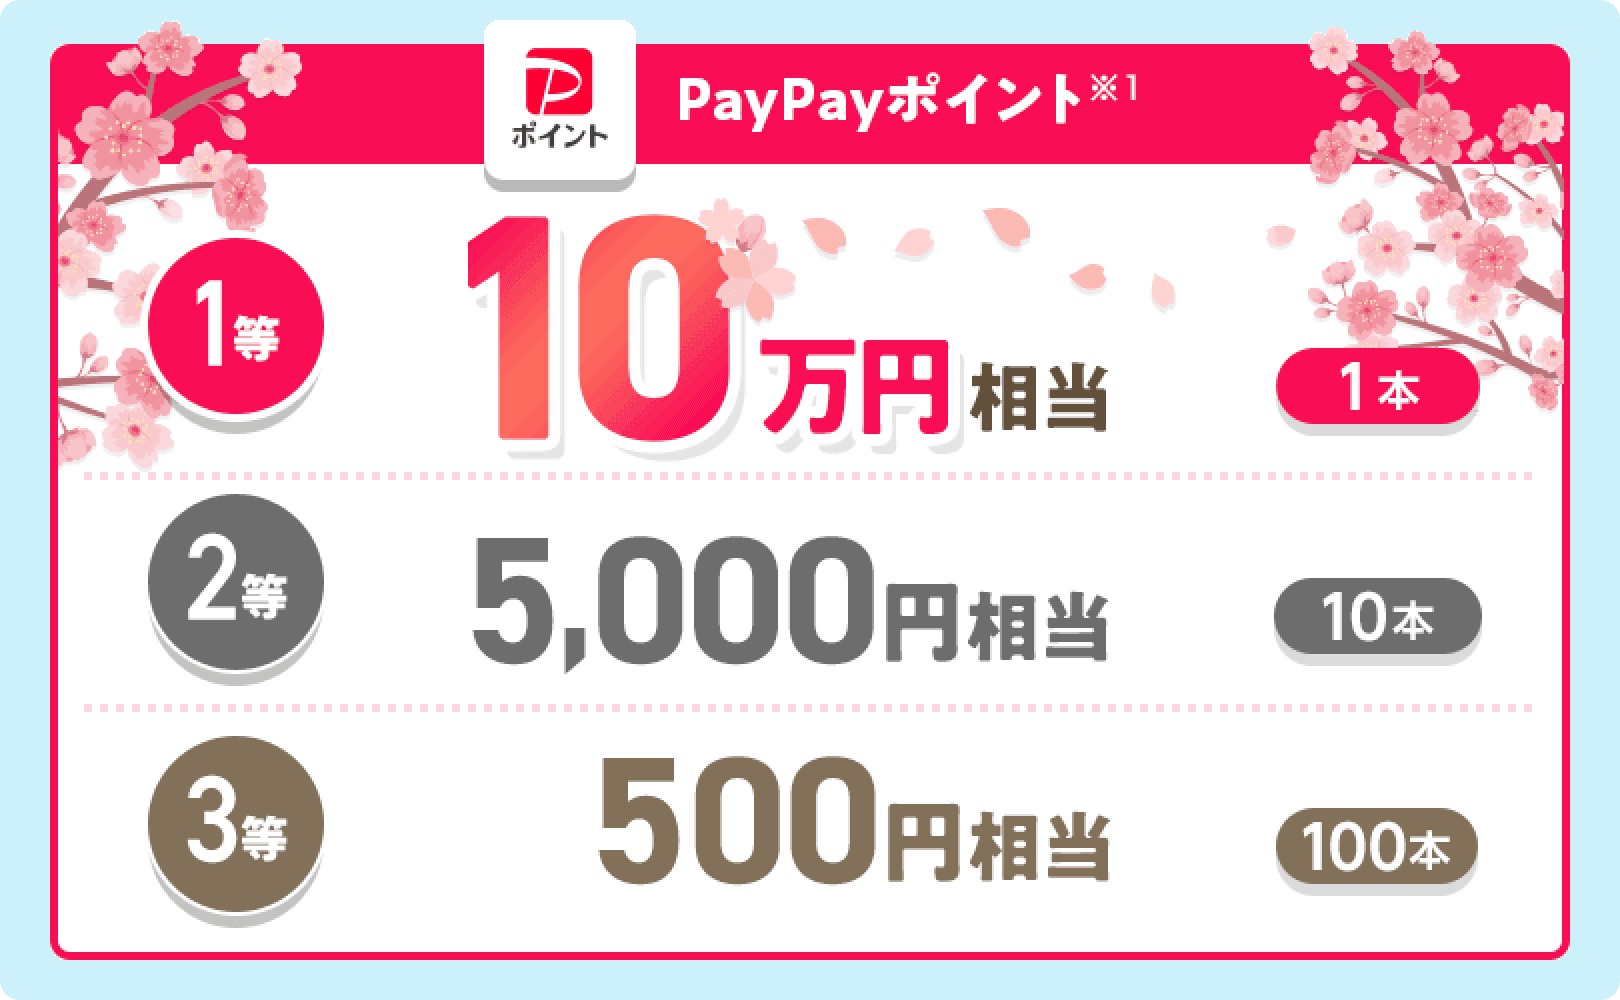 PayPayポイント（※1） 1等 10万円相当（1本）2等 5,000円相当（10本）3等 500円相当（100本）